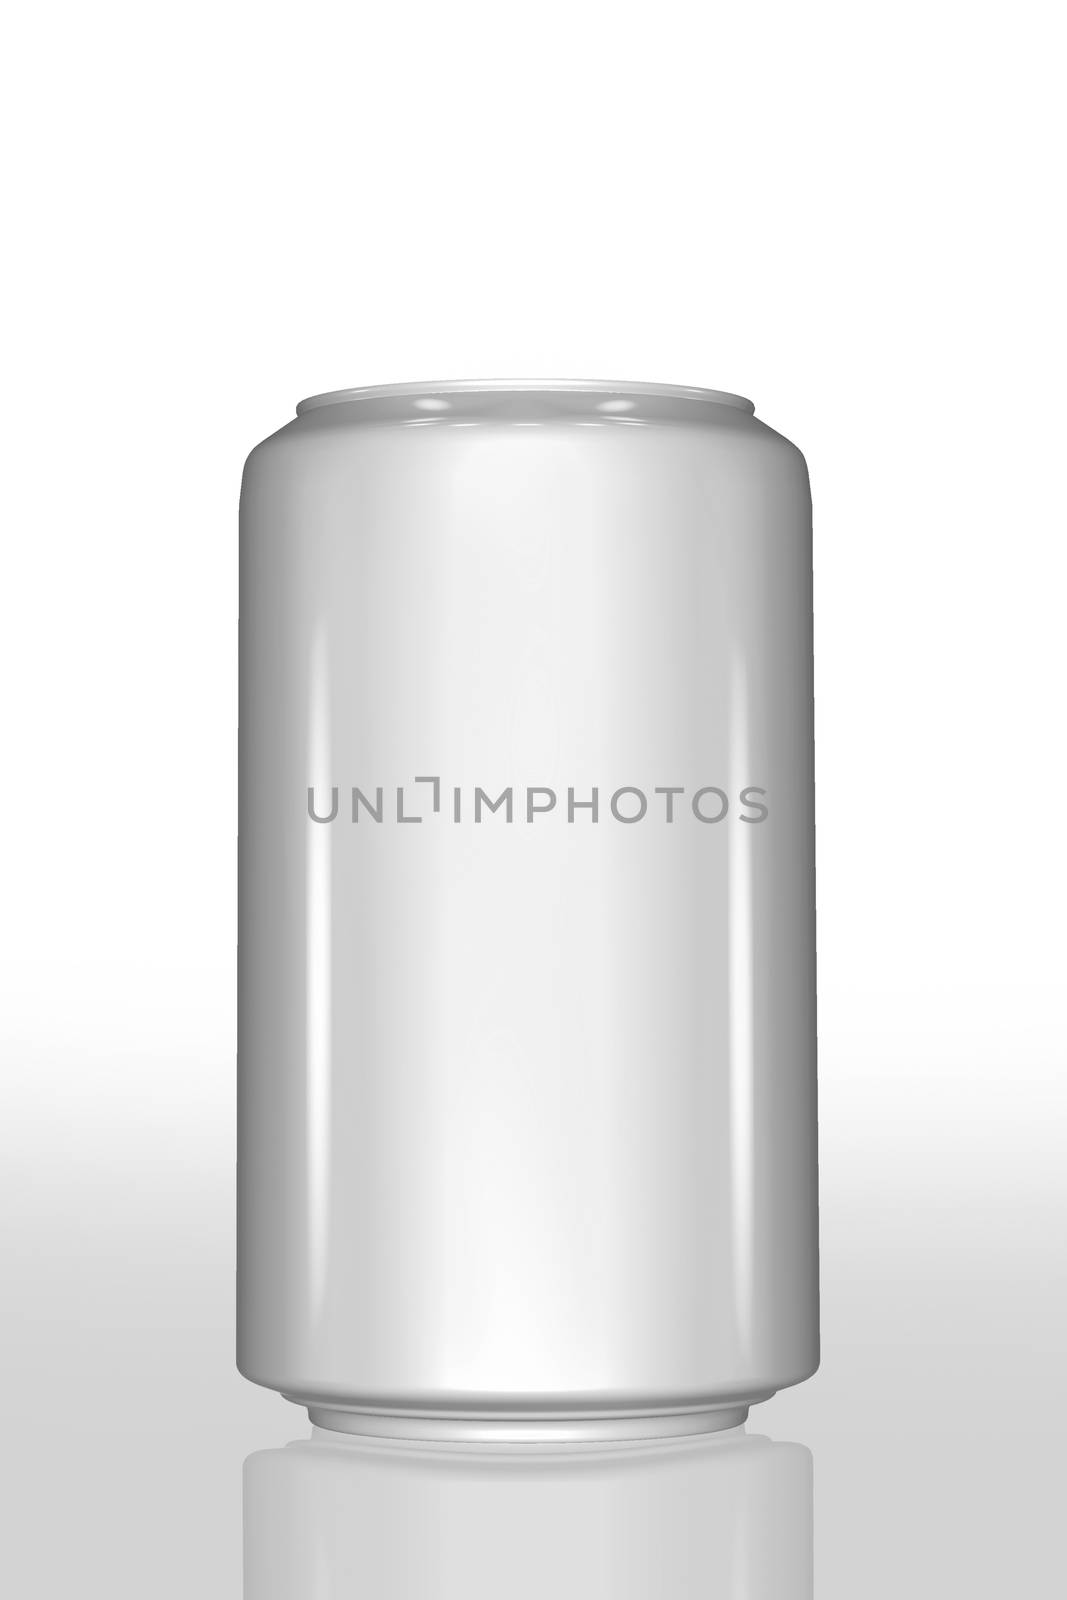 Illustration of aluminum can